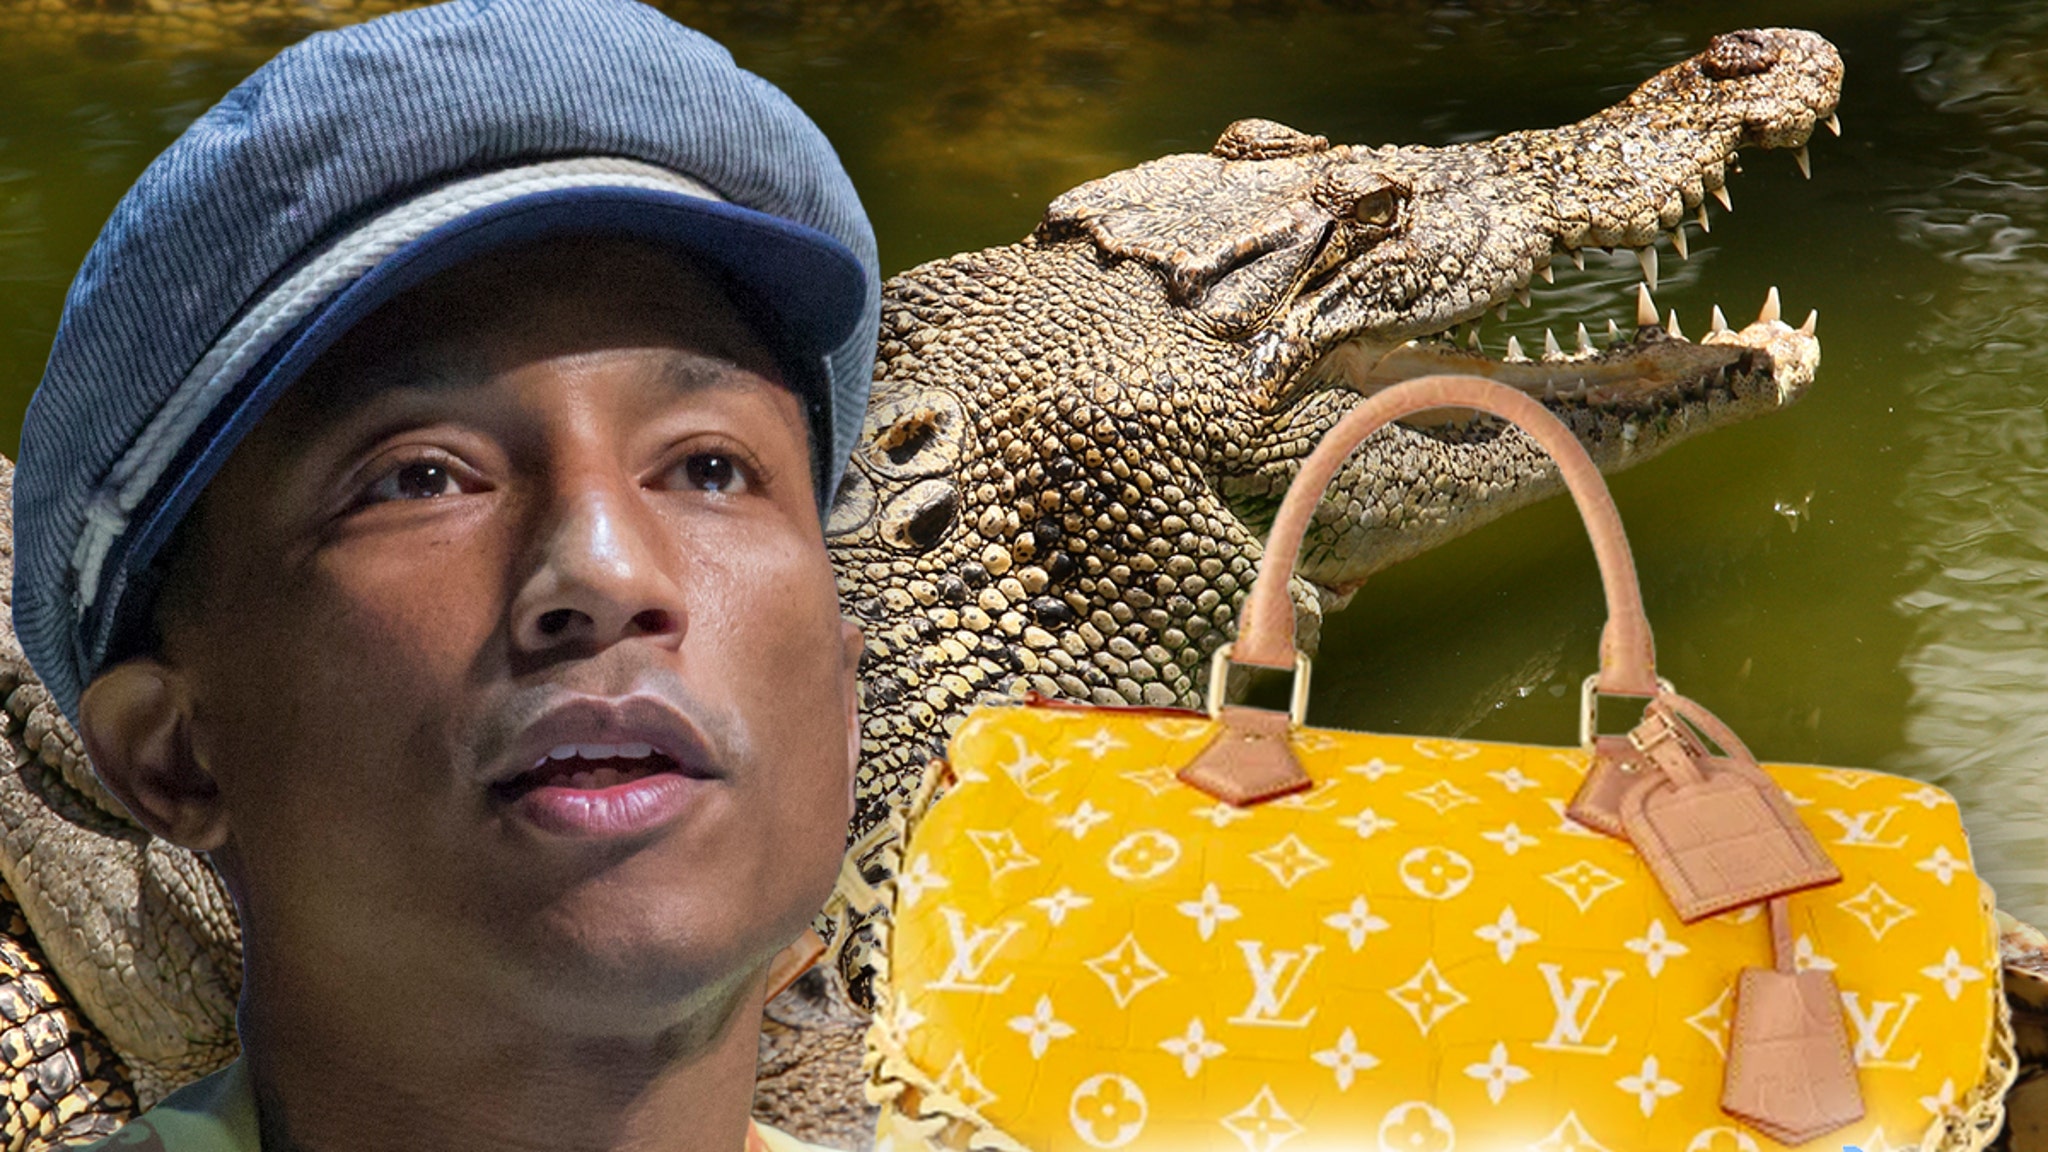 London Zoo's crocodile skin handbag display goes viral